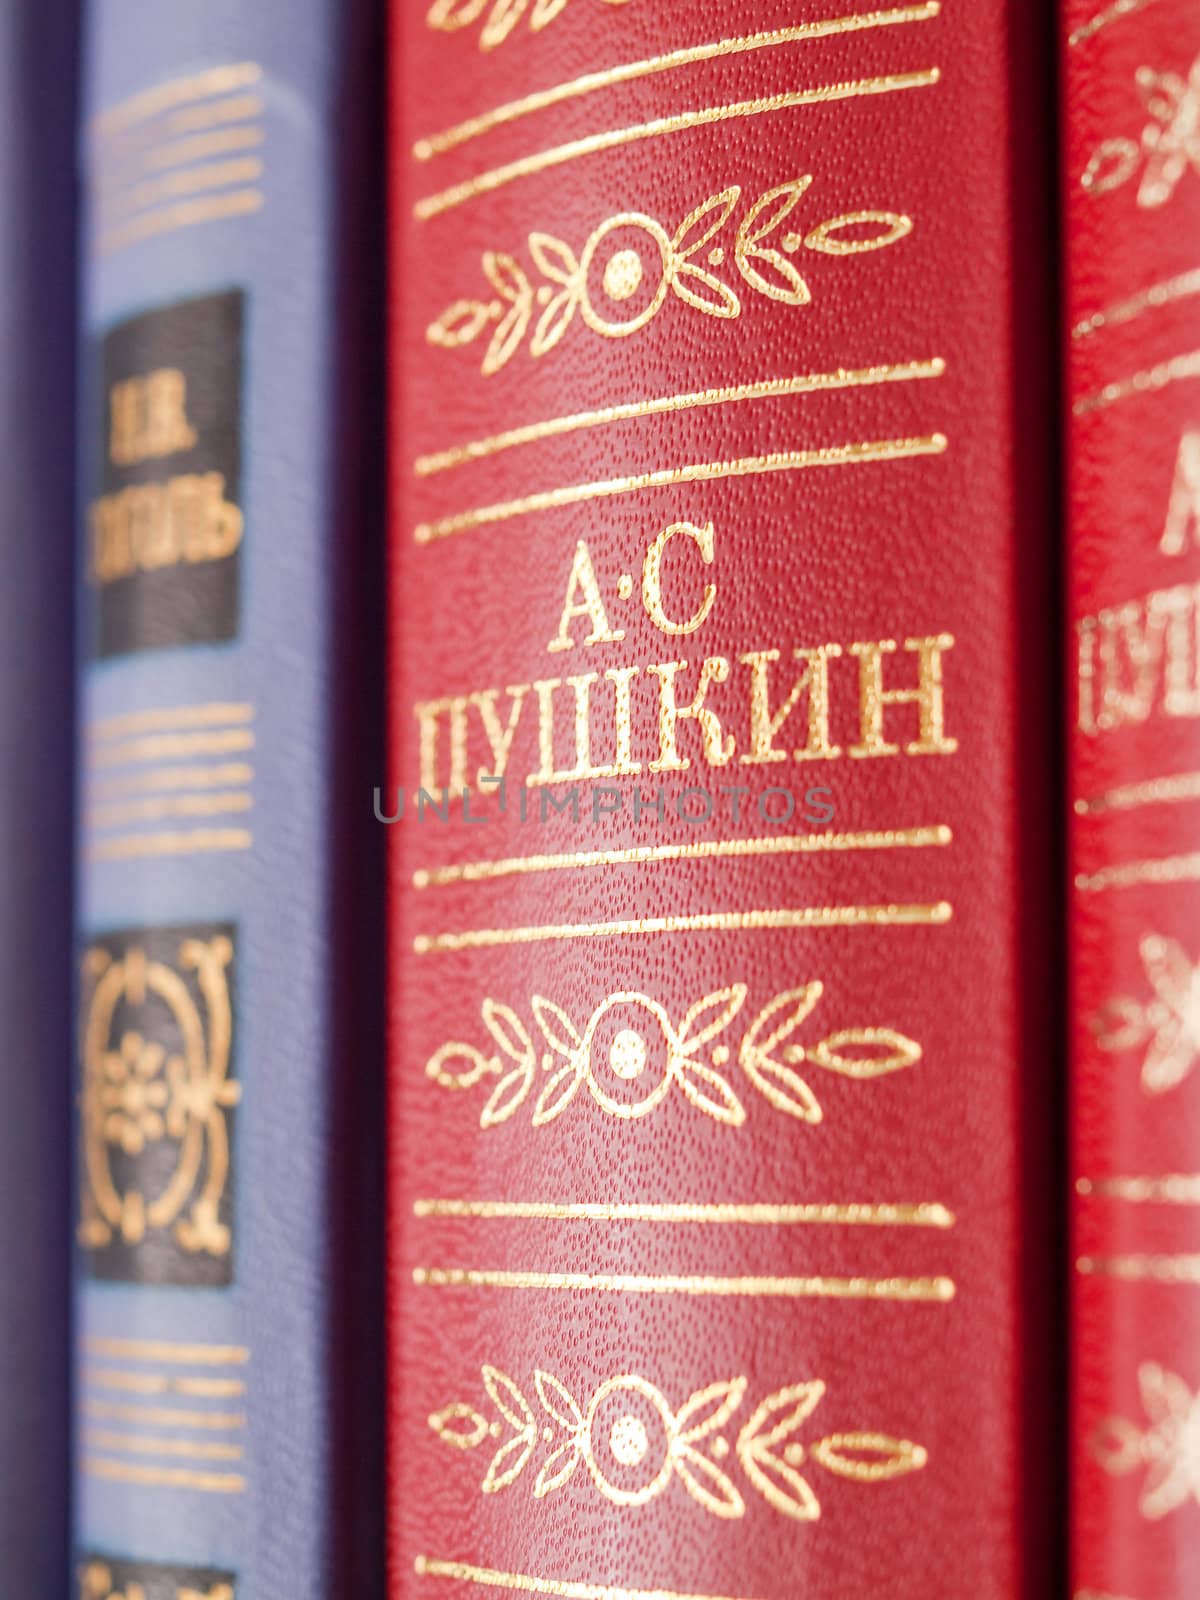 A book of Russian poet Alexander Pushkin on the shelf